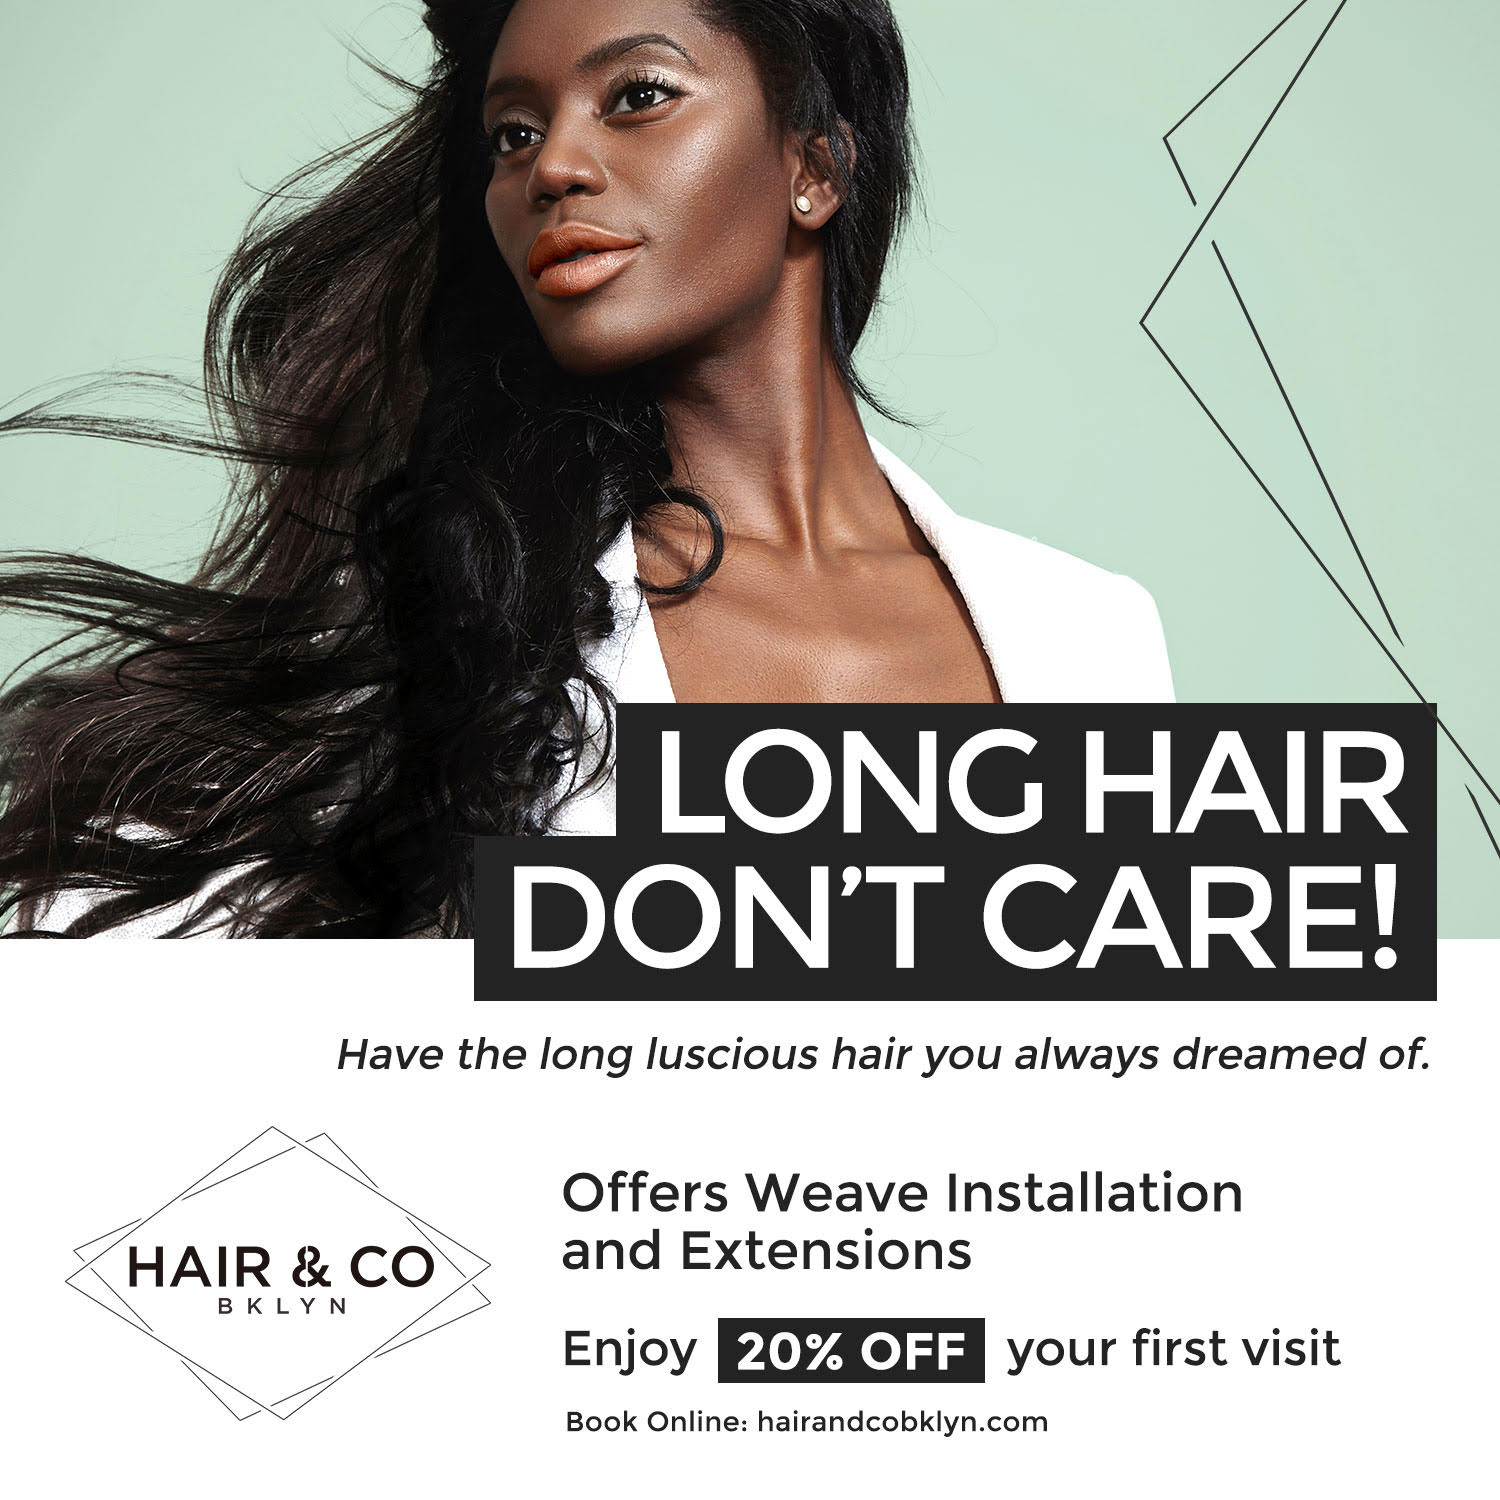 Hair & Co BKLYN Weave Installation & Hair Extension Promotion Prospect Heights Brooklyn Salon